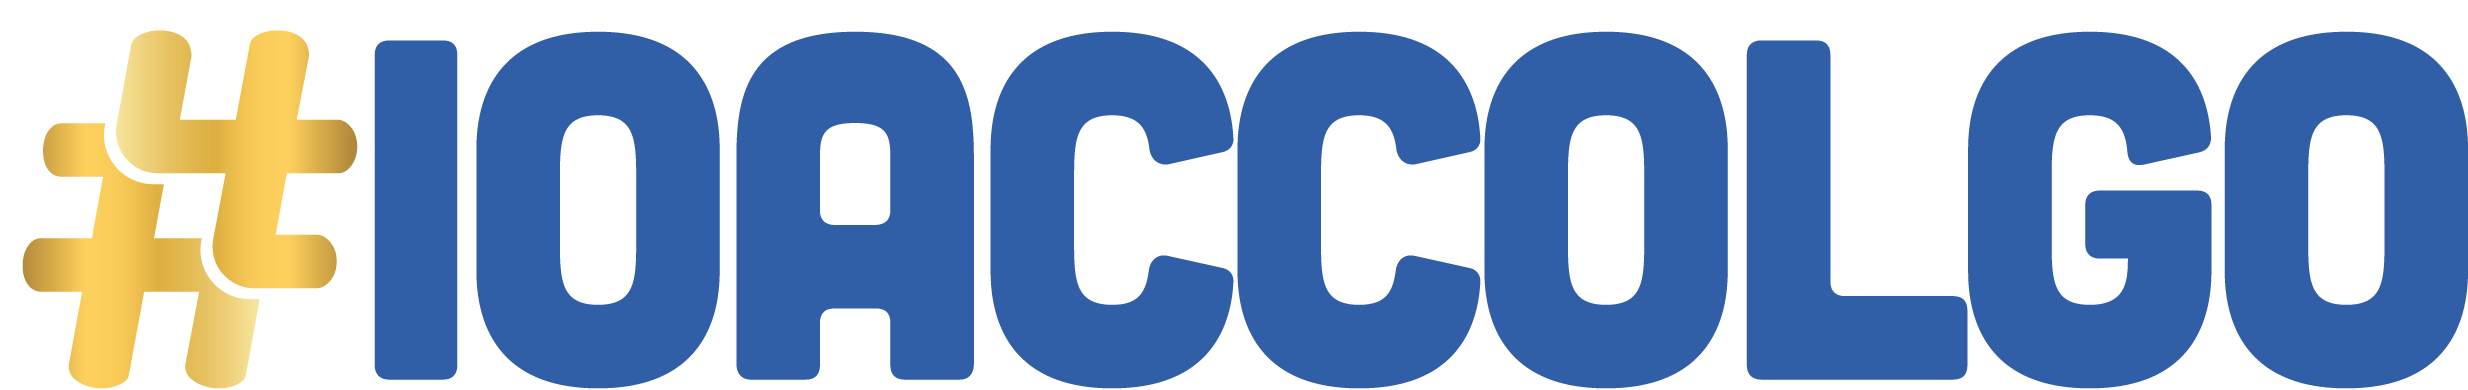 IO_ACCOLGO_logo